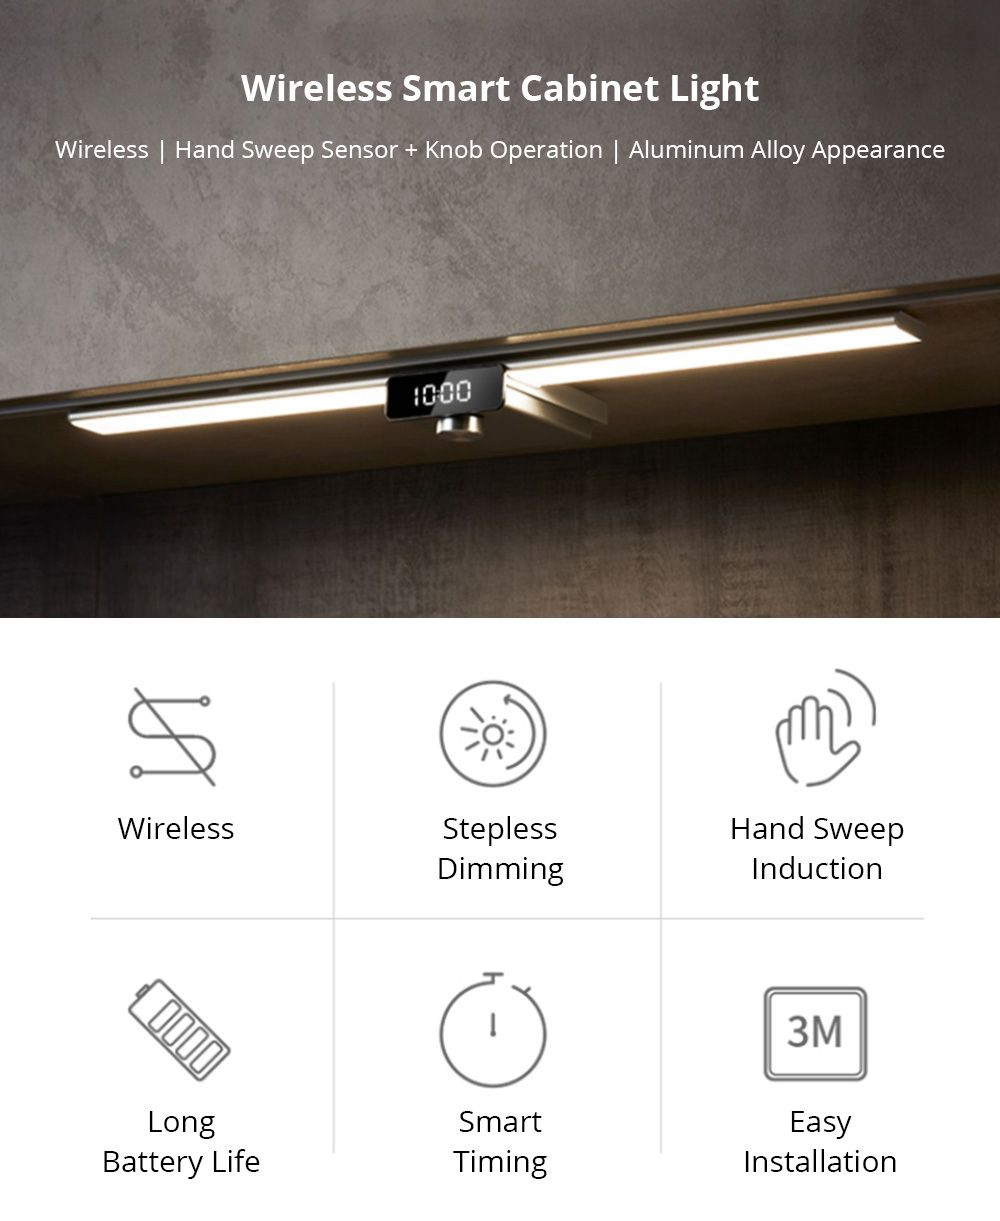 Wireless Smart Cabinet Light Wireless I Hand Sweep Sensor + Knob Operation I Aluminum Alloy Appearance